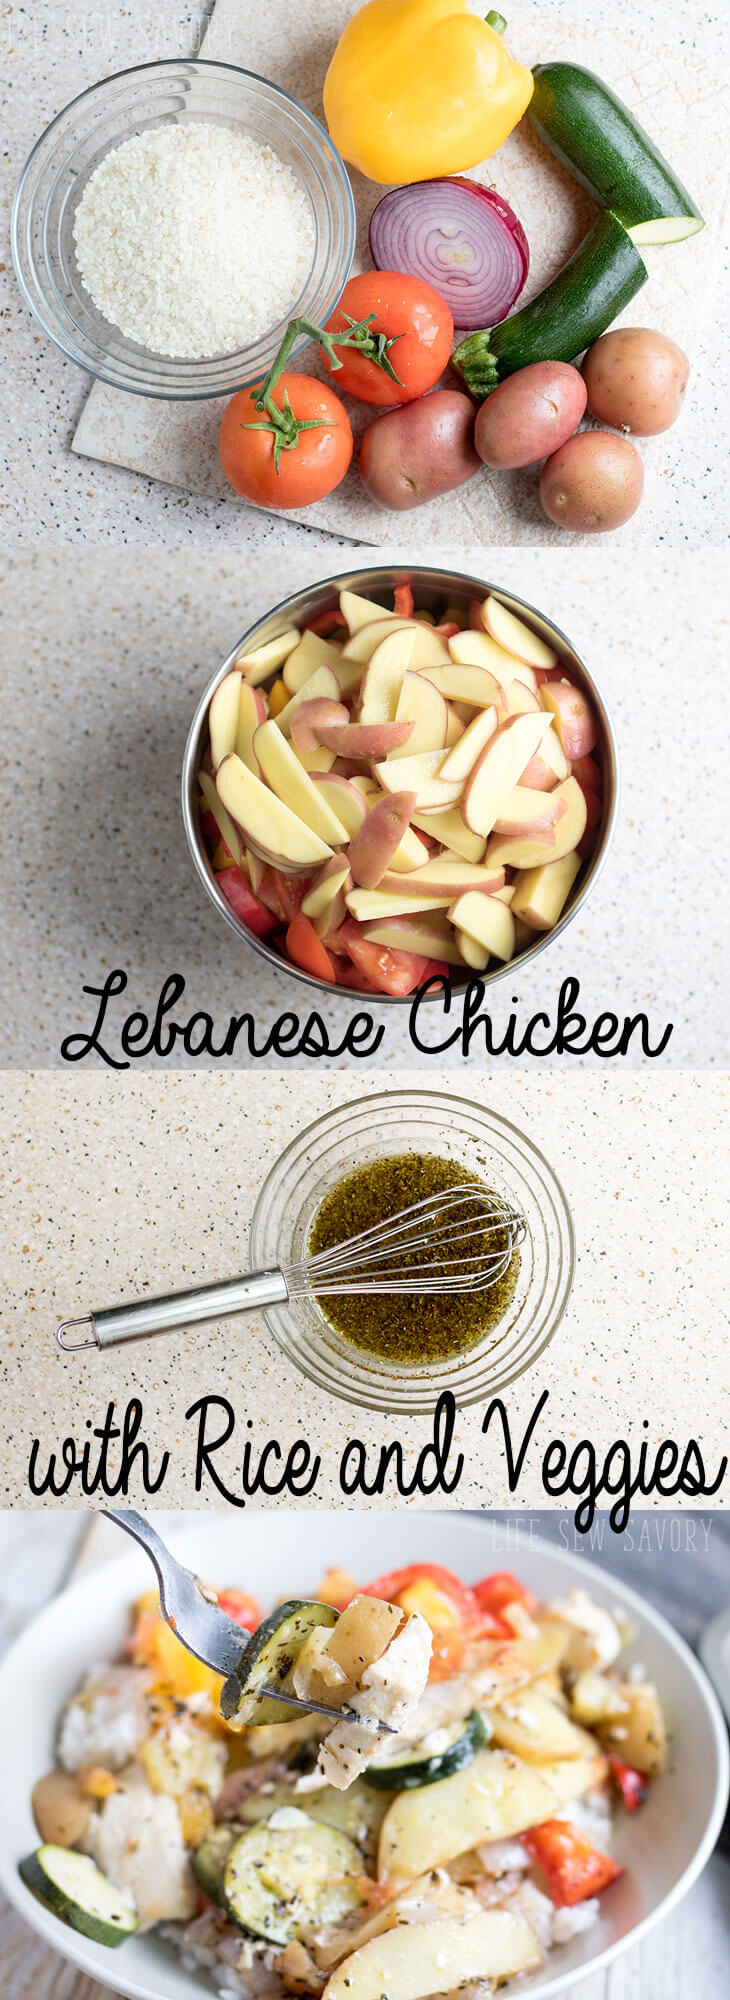 lebanese-chicken-recipe-with-veggies-and-rice